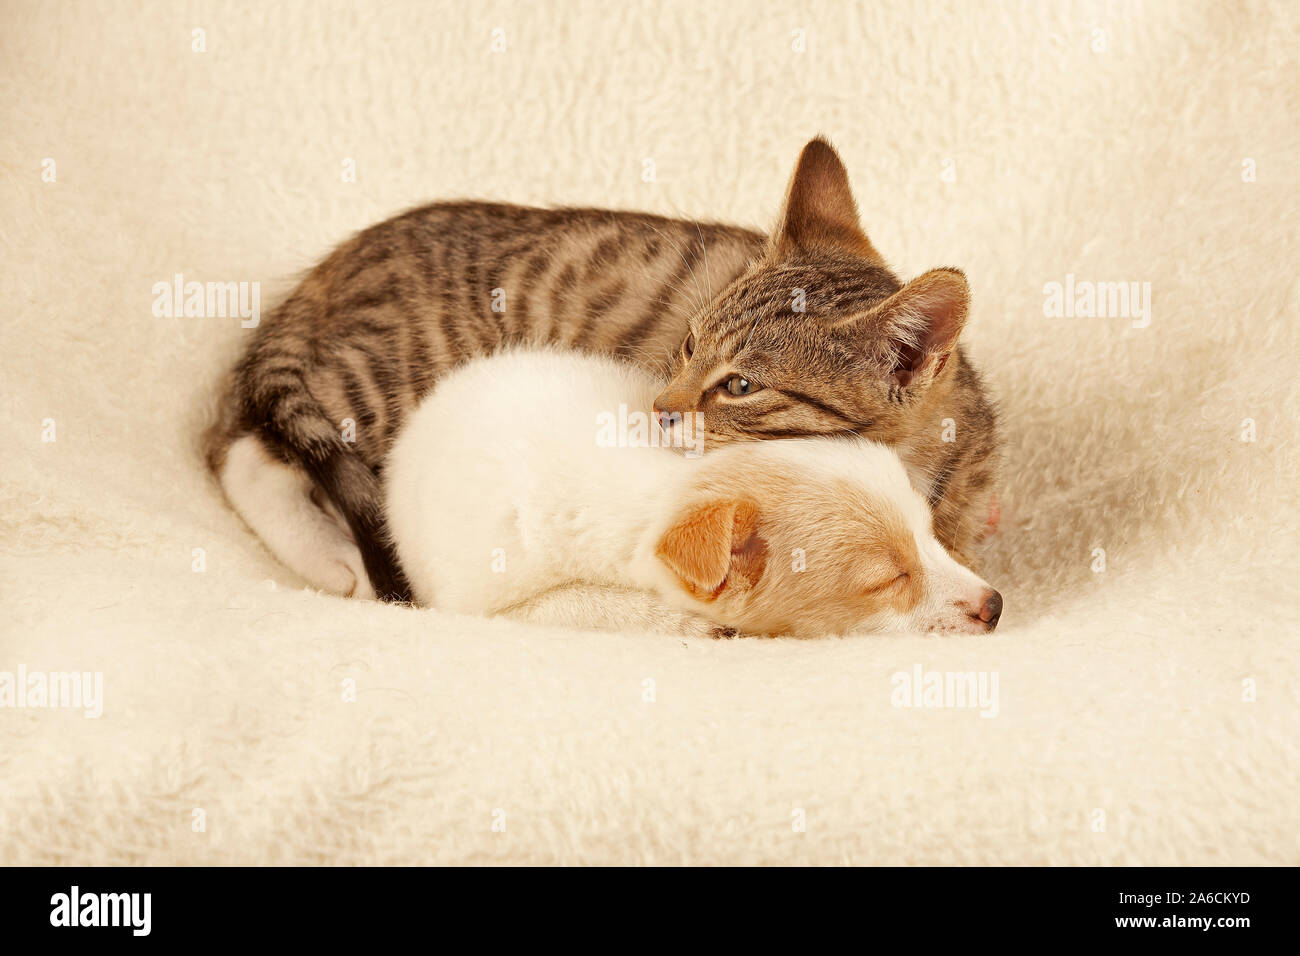 junges Kätzchen und junger Hund schlafen friedlich nebeneinander | Portrait of a young kitten and a young pup peacefully asleep beside each other. Stock Photo